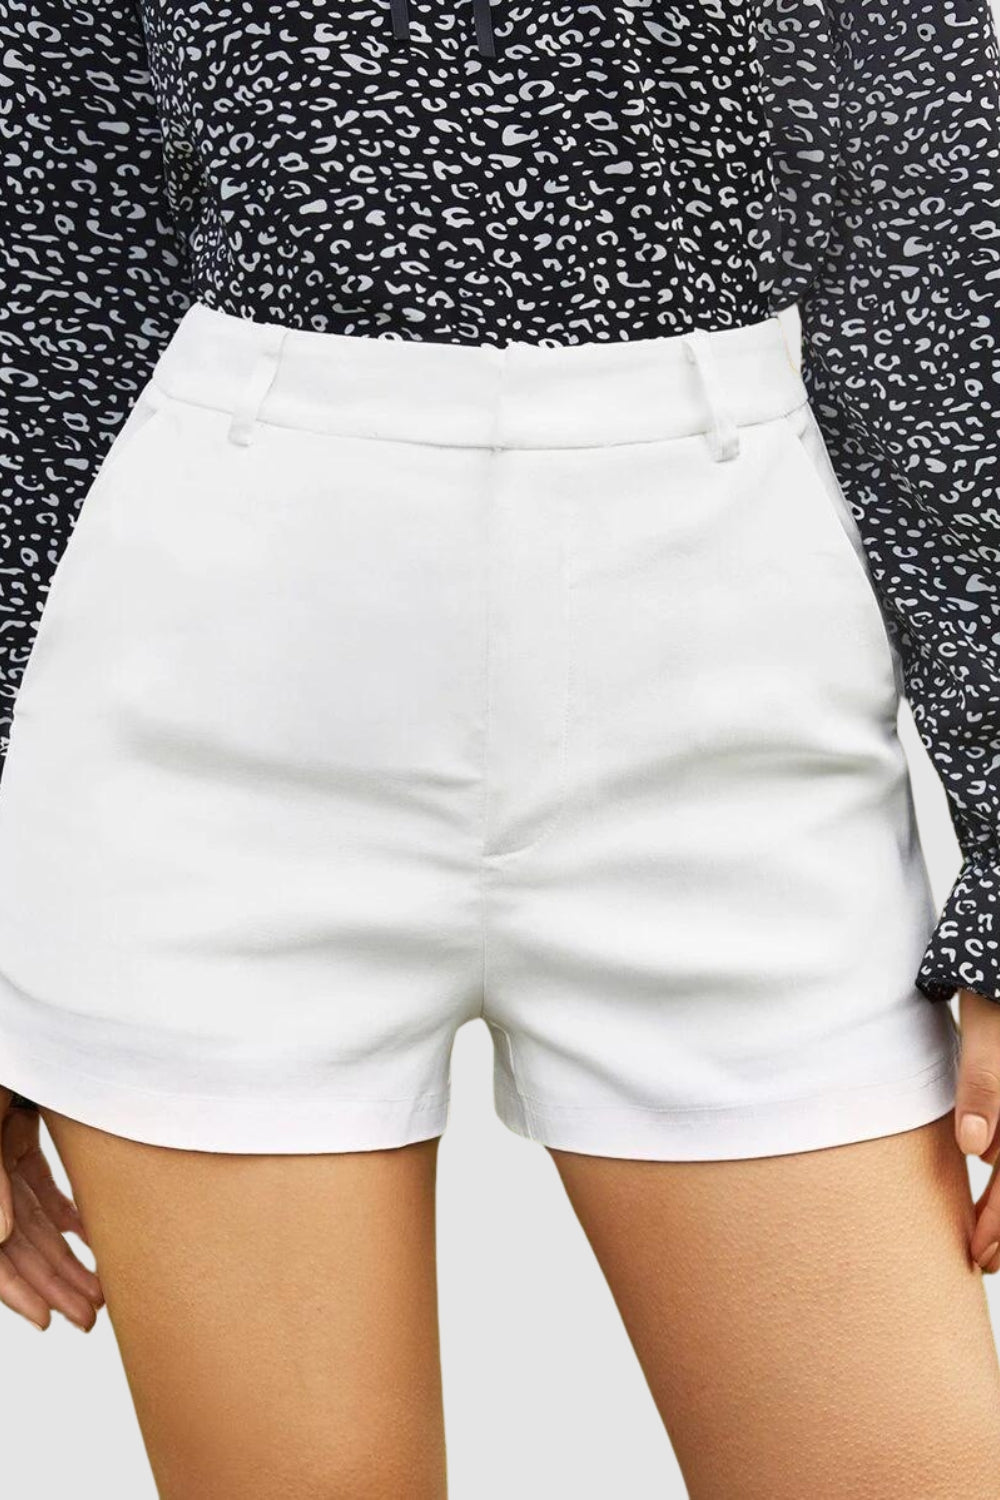 Twinkle White Shorts